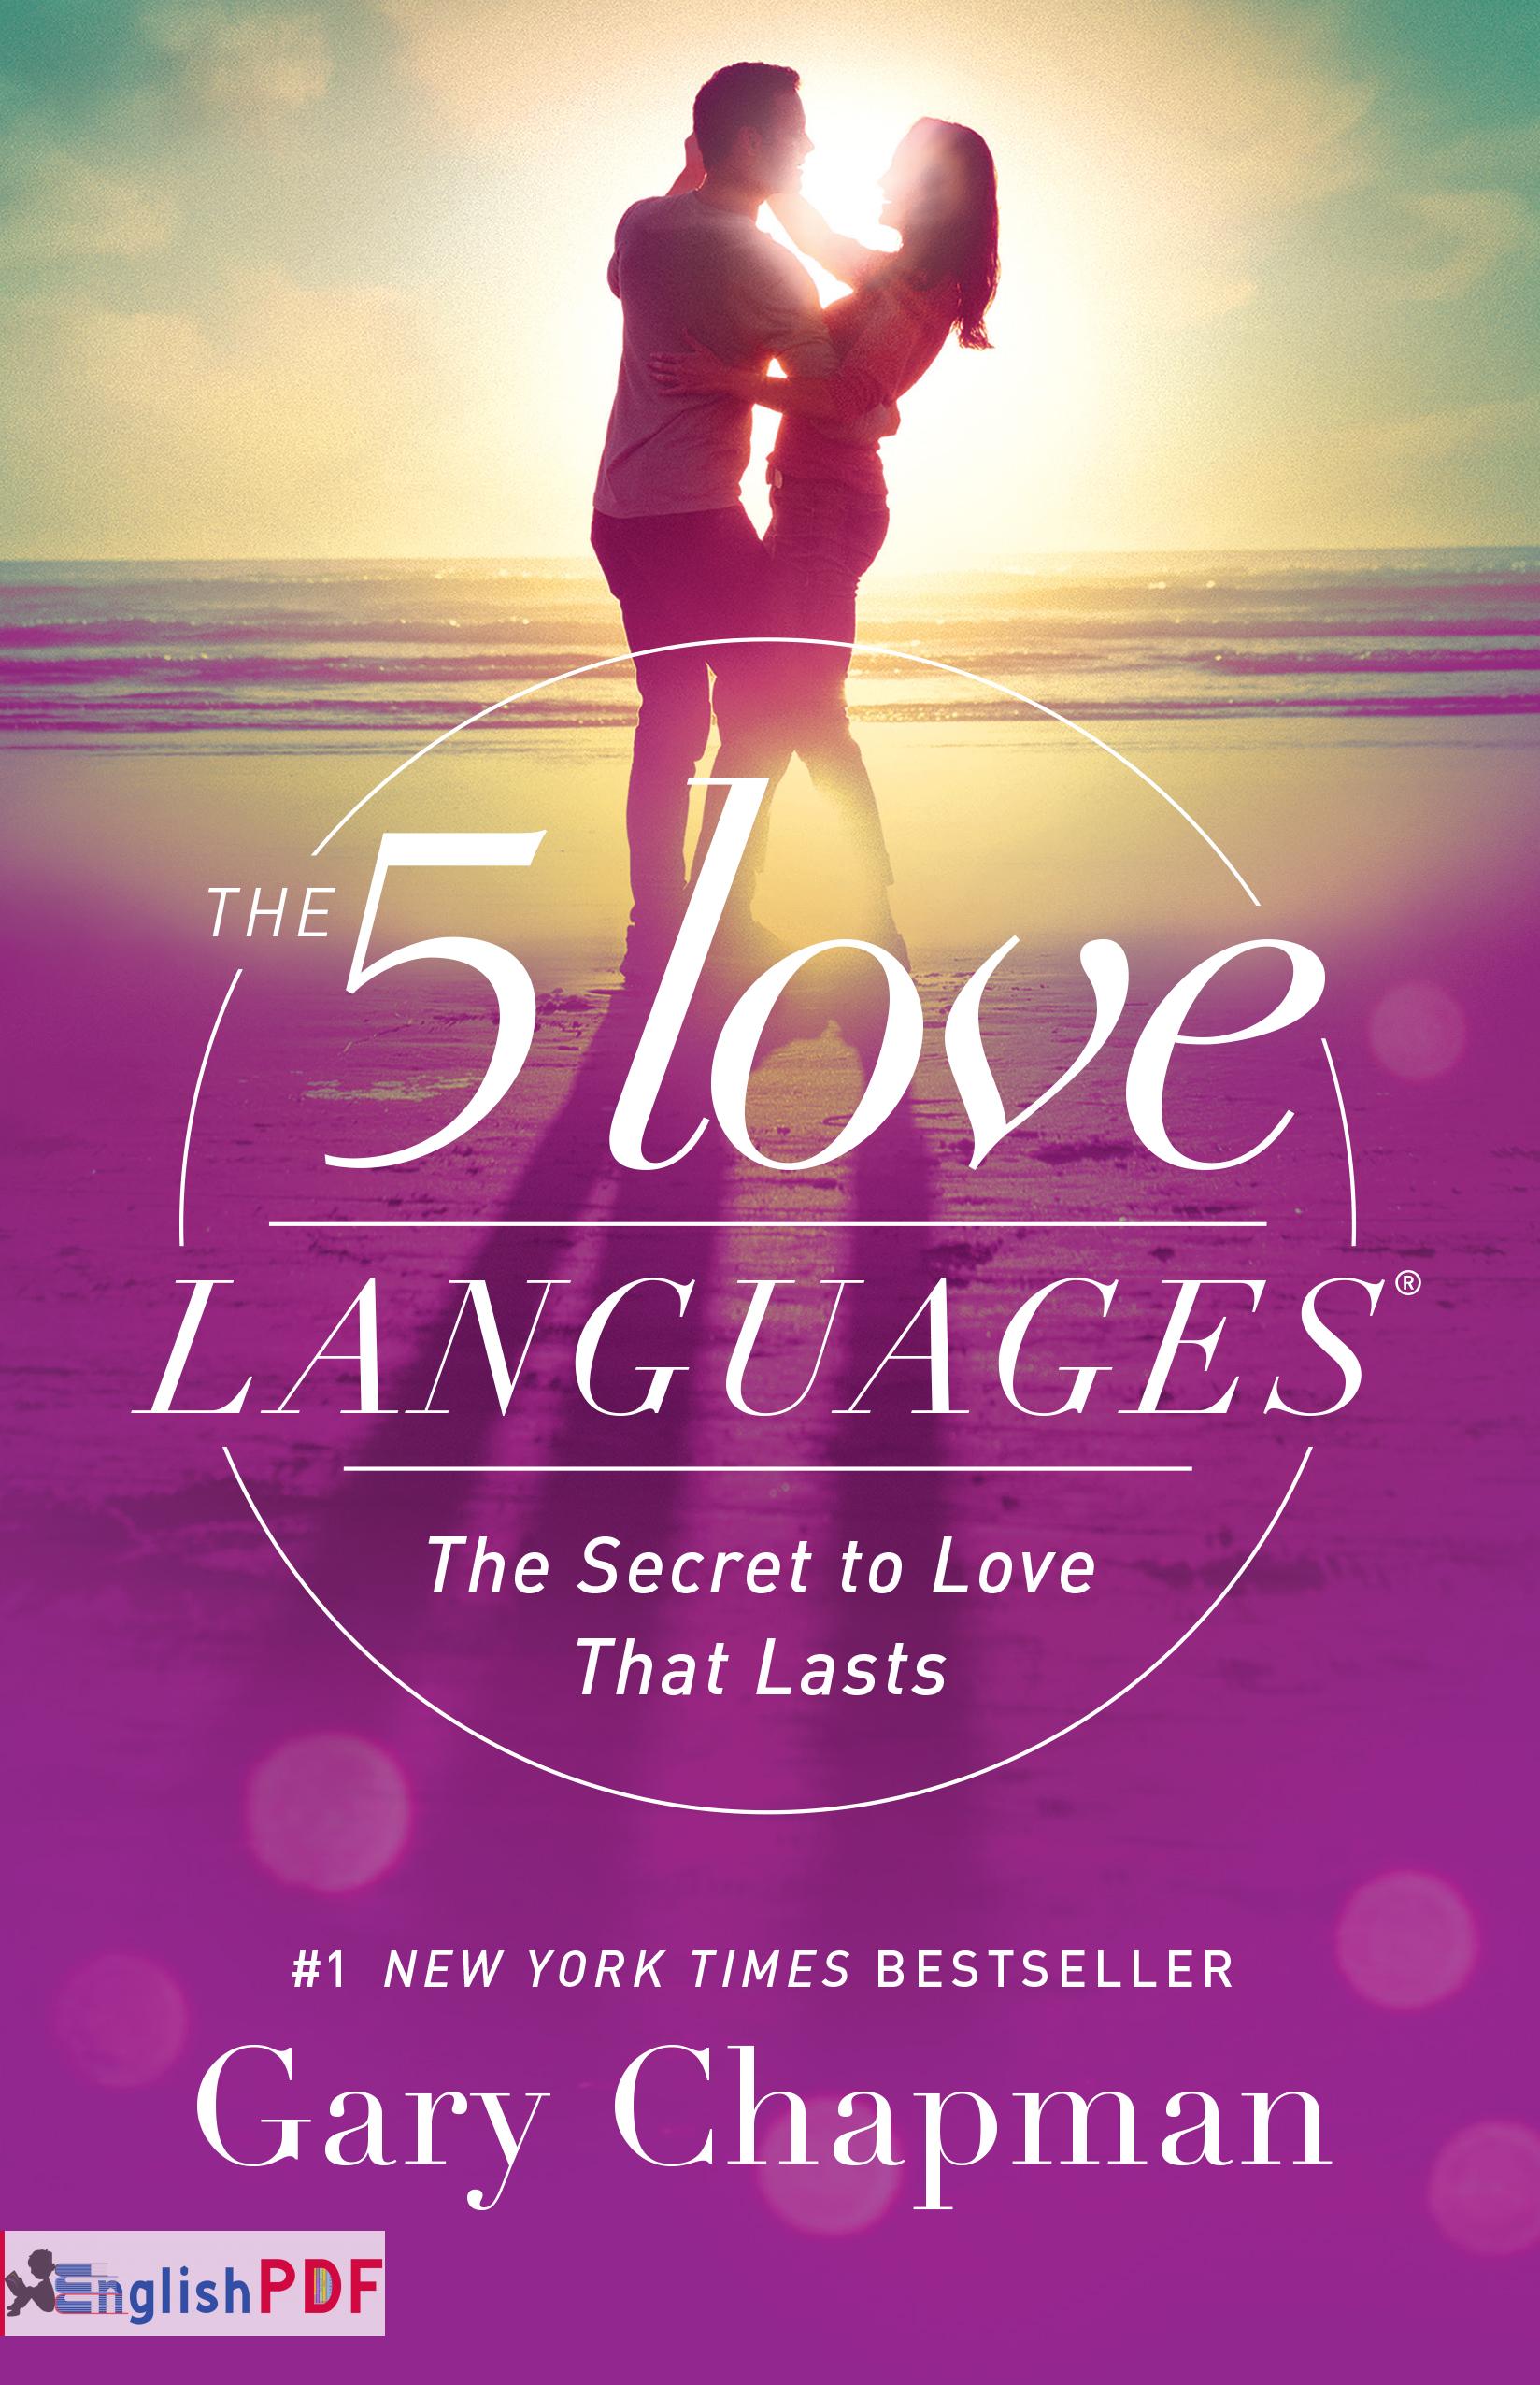 The Five Love Languages The Secret to Love that Lasts PDF EnglishPDF